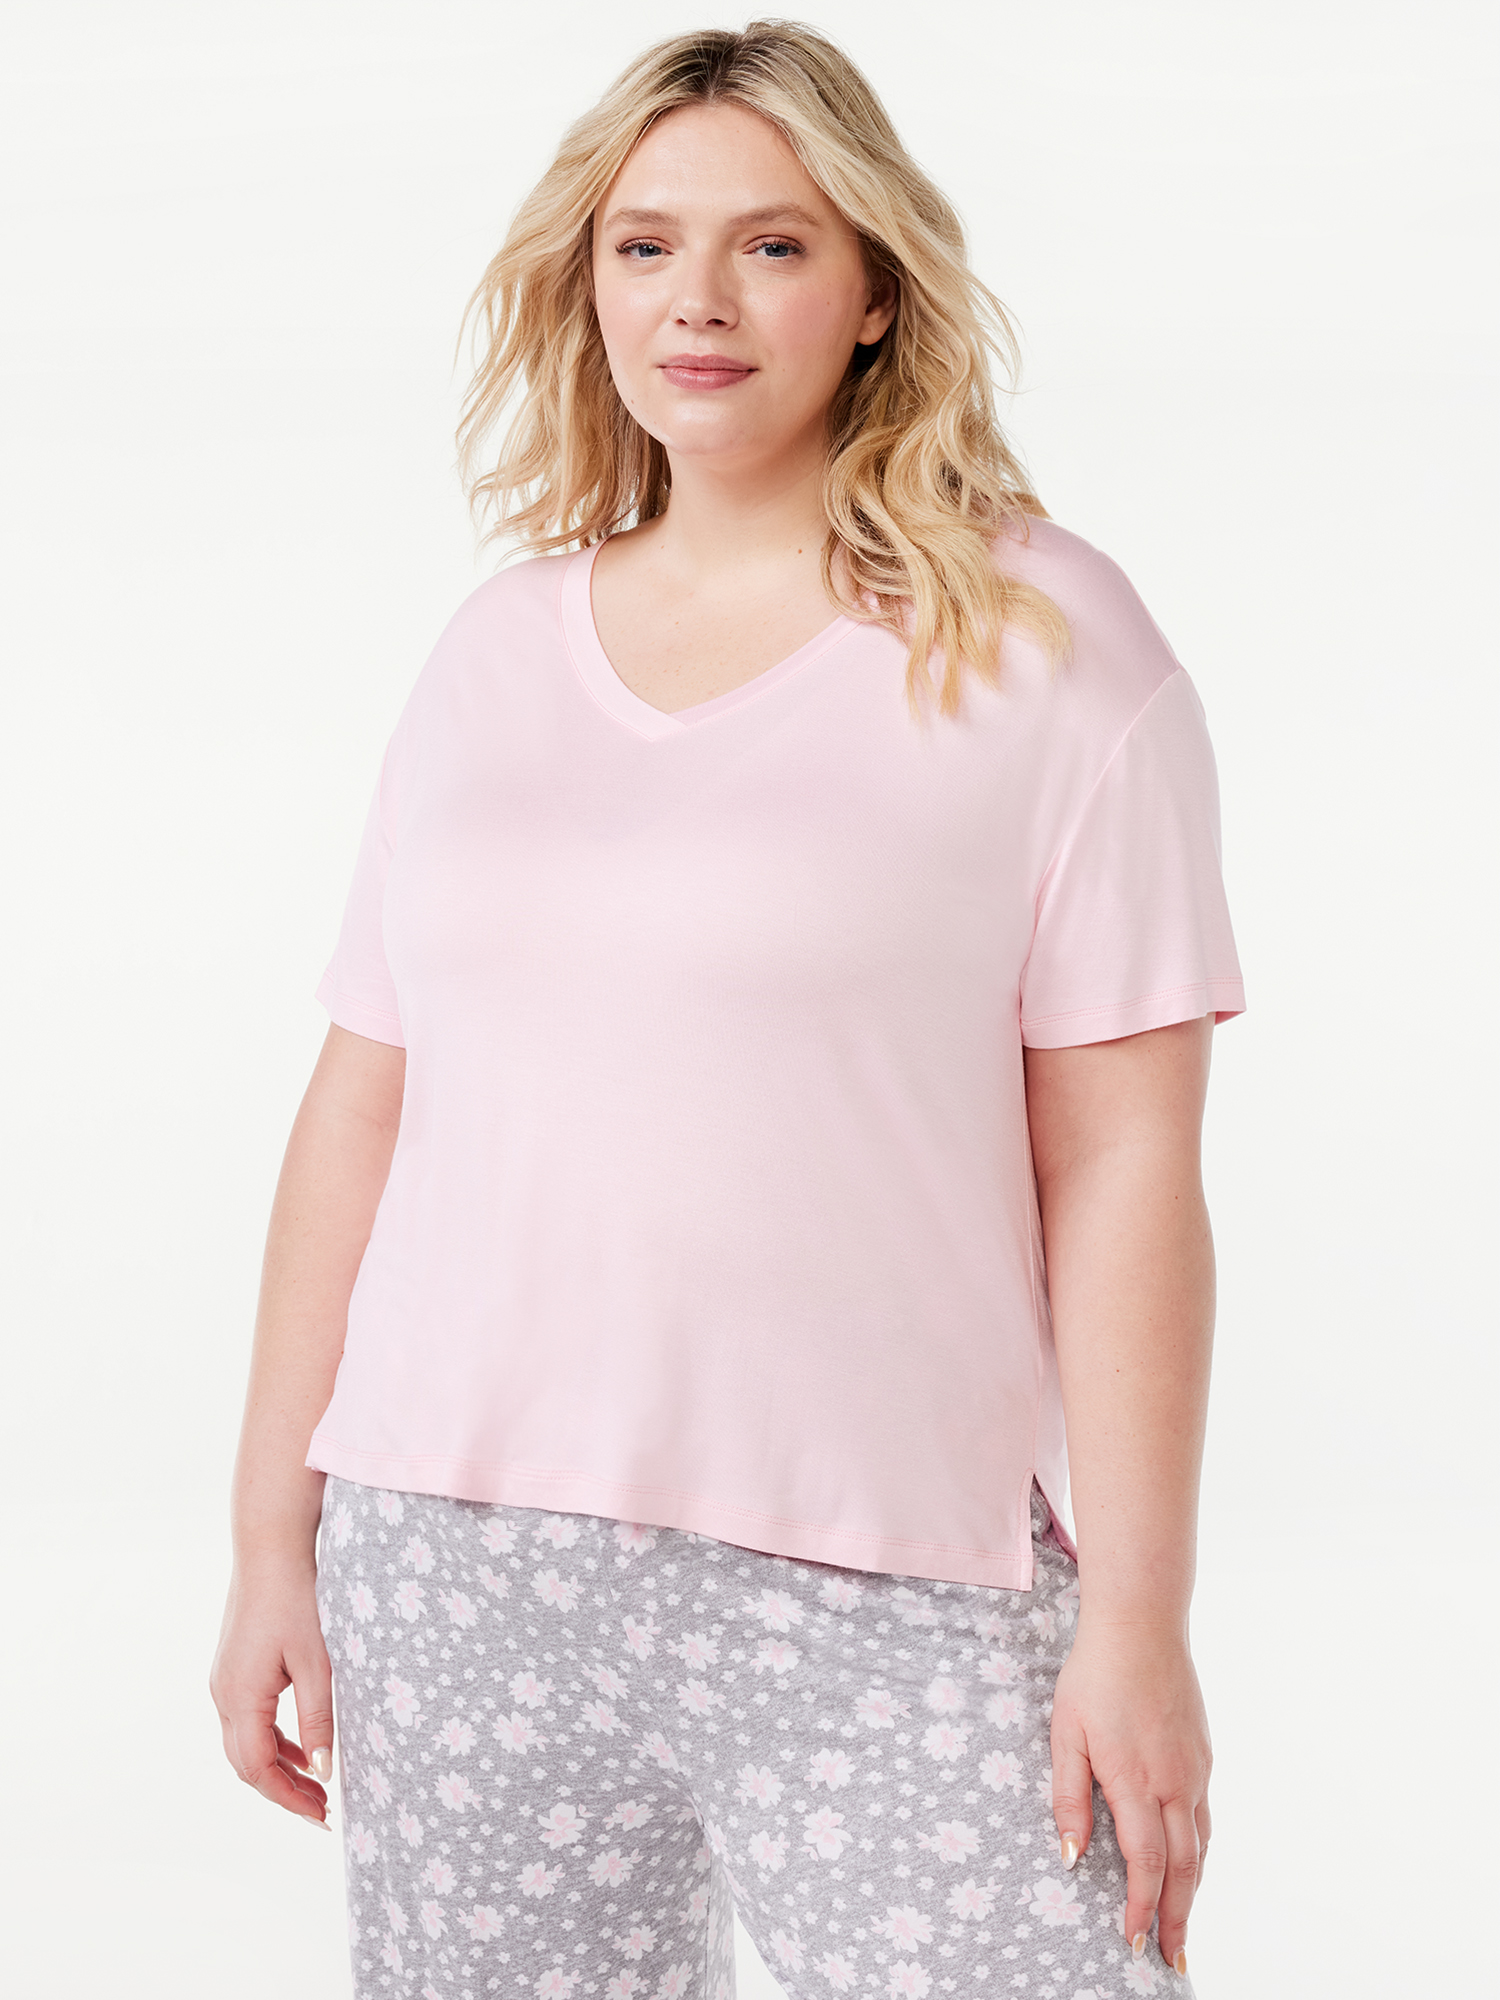 Joyspun Women's V-Neck Sleep T-Shirt, Sizes S to 3X - image 1 of 5